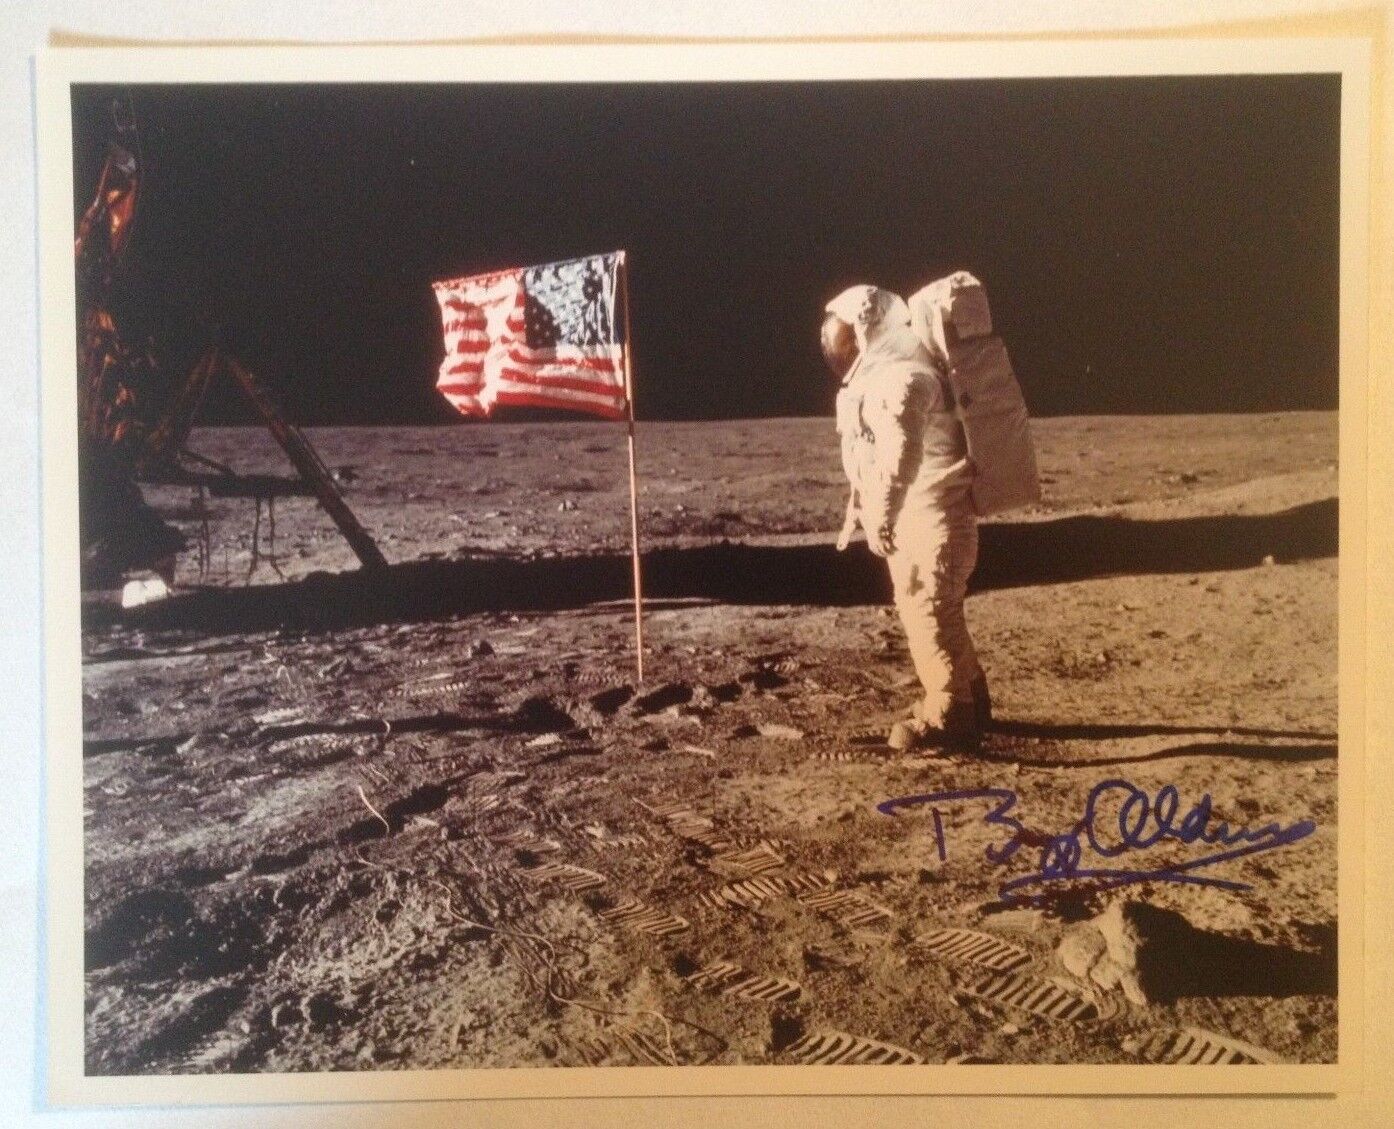 Astronaut Buzz Aldrin Autographed Photograph on the Moon with Flag (Apollo 11)